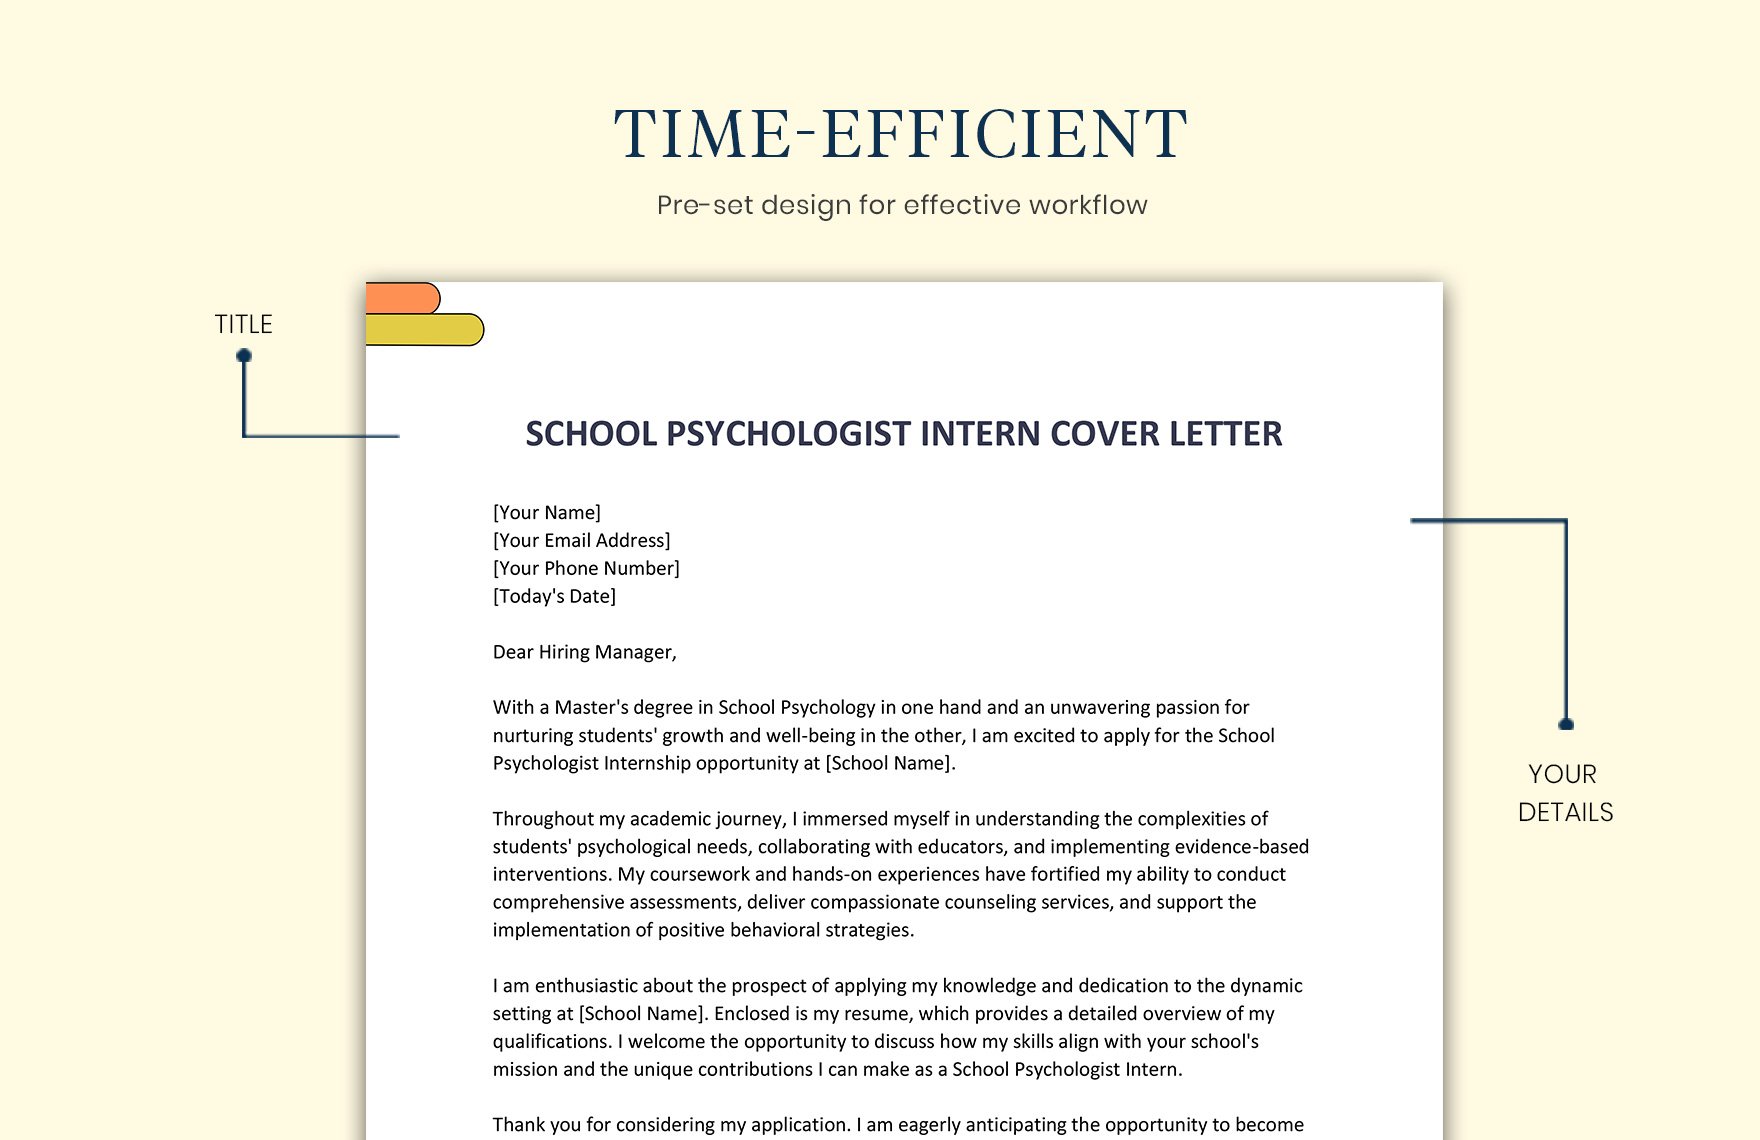 School Psychologist Intern Cover Letter